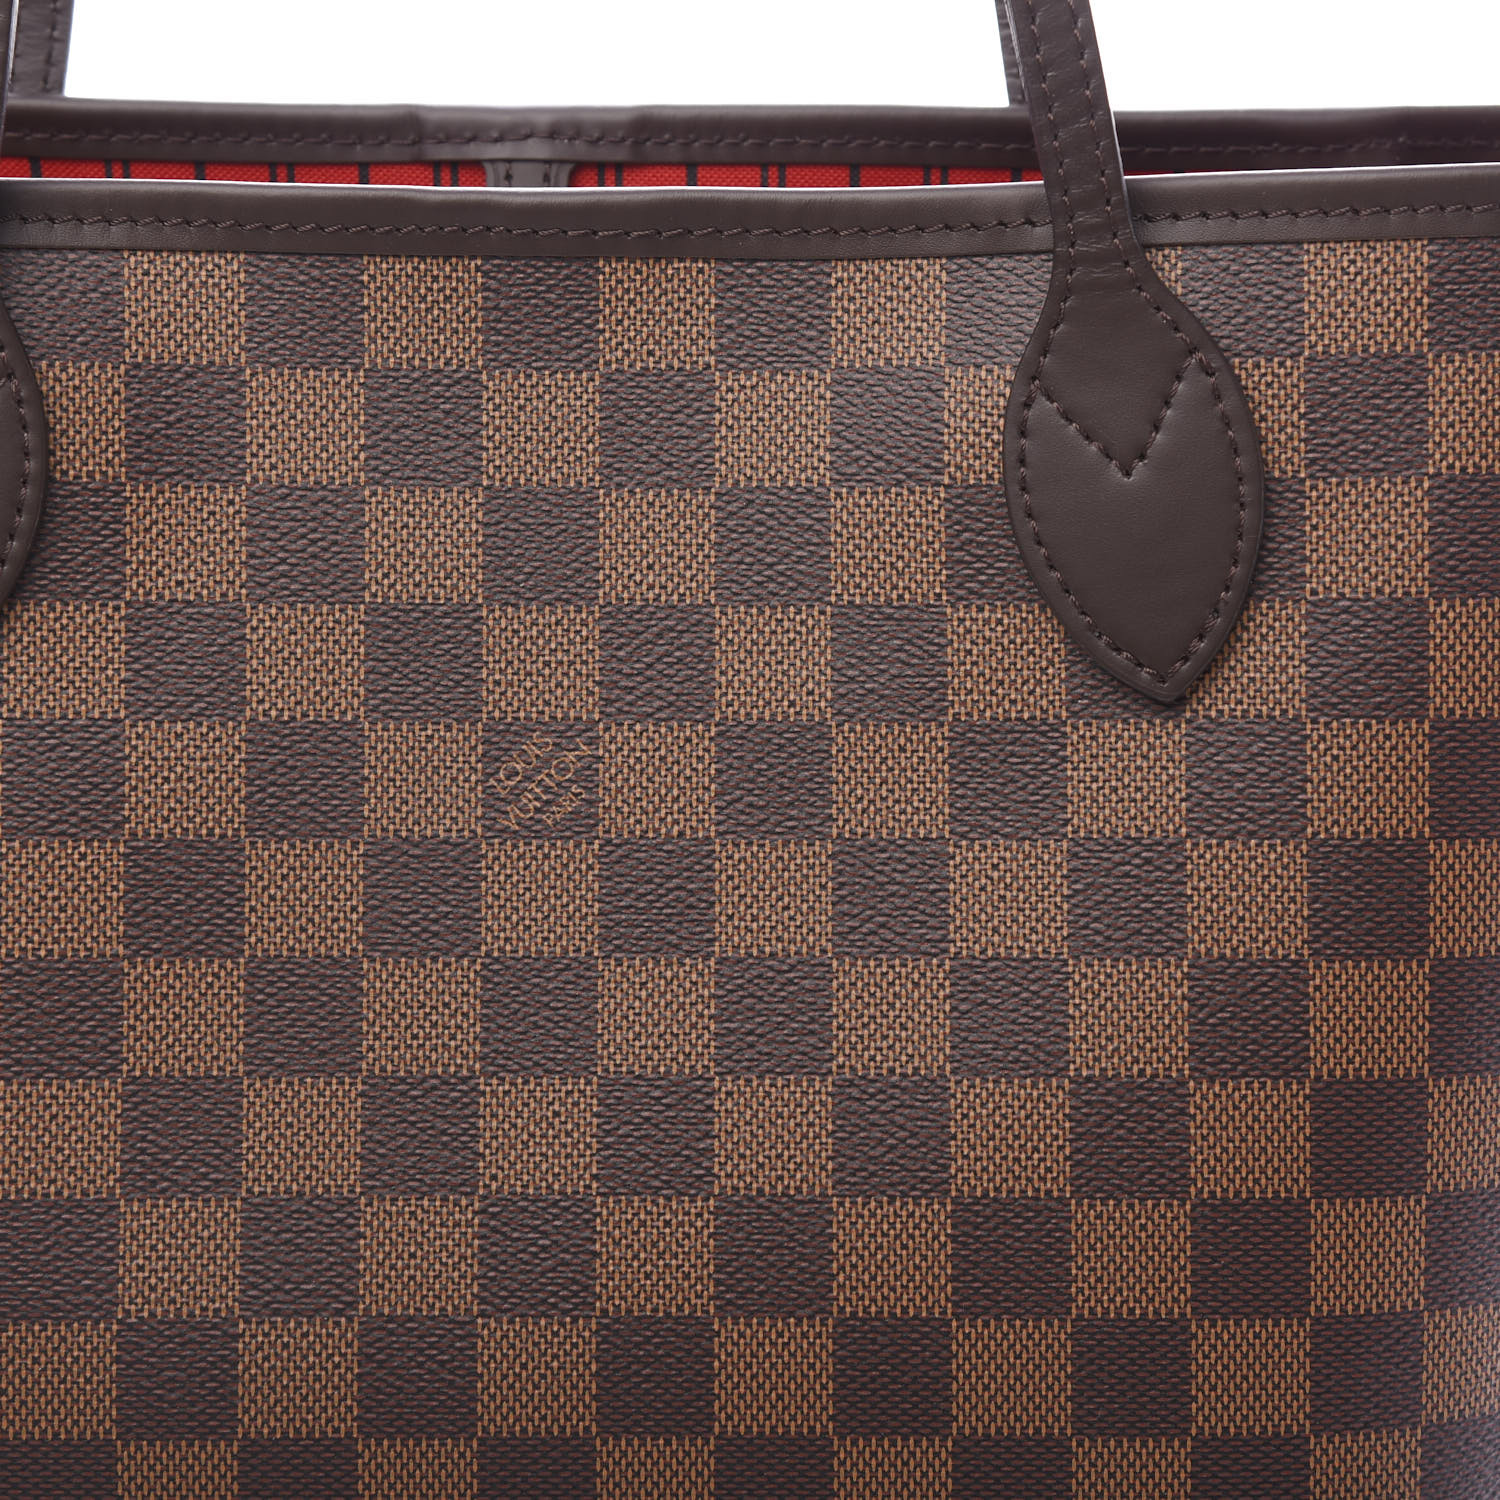 A Design Hit: The Louis Vuitton Neverfull